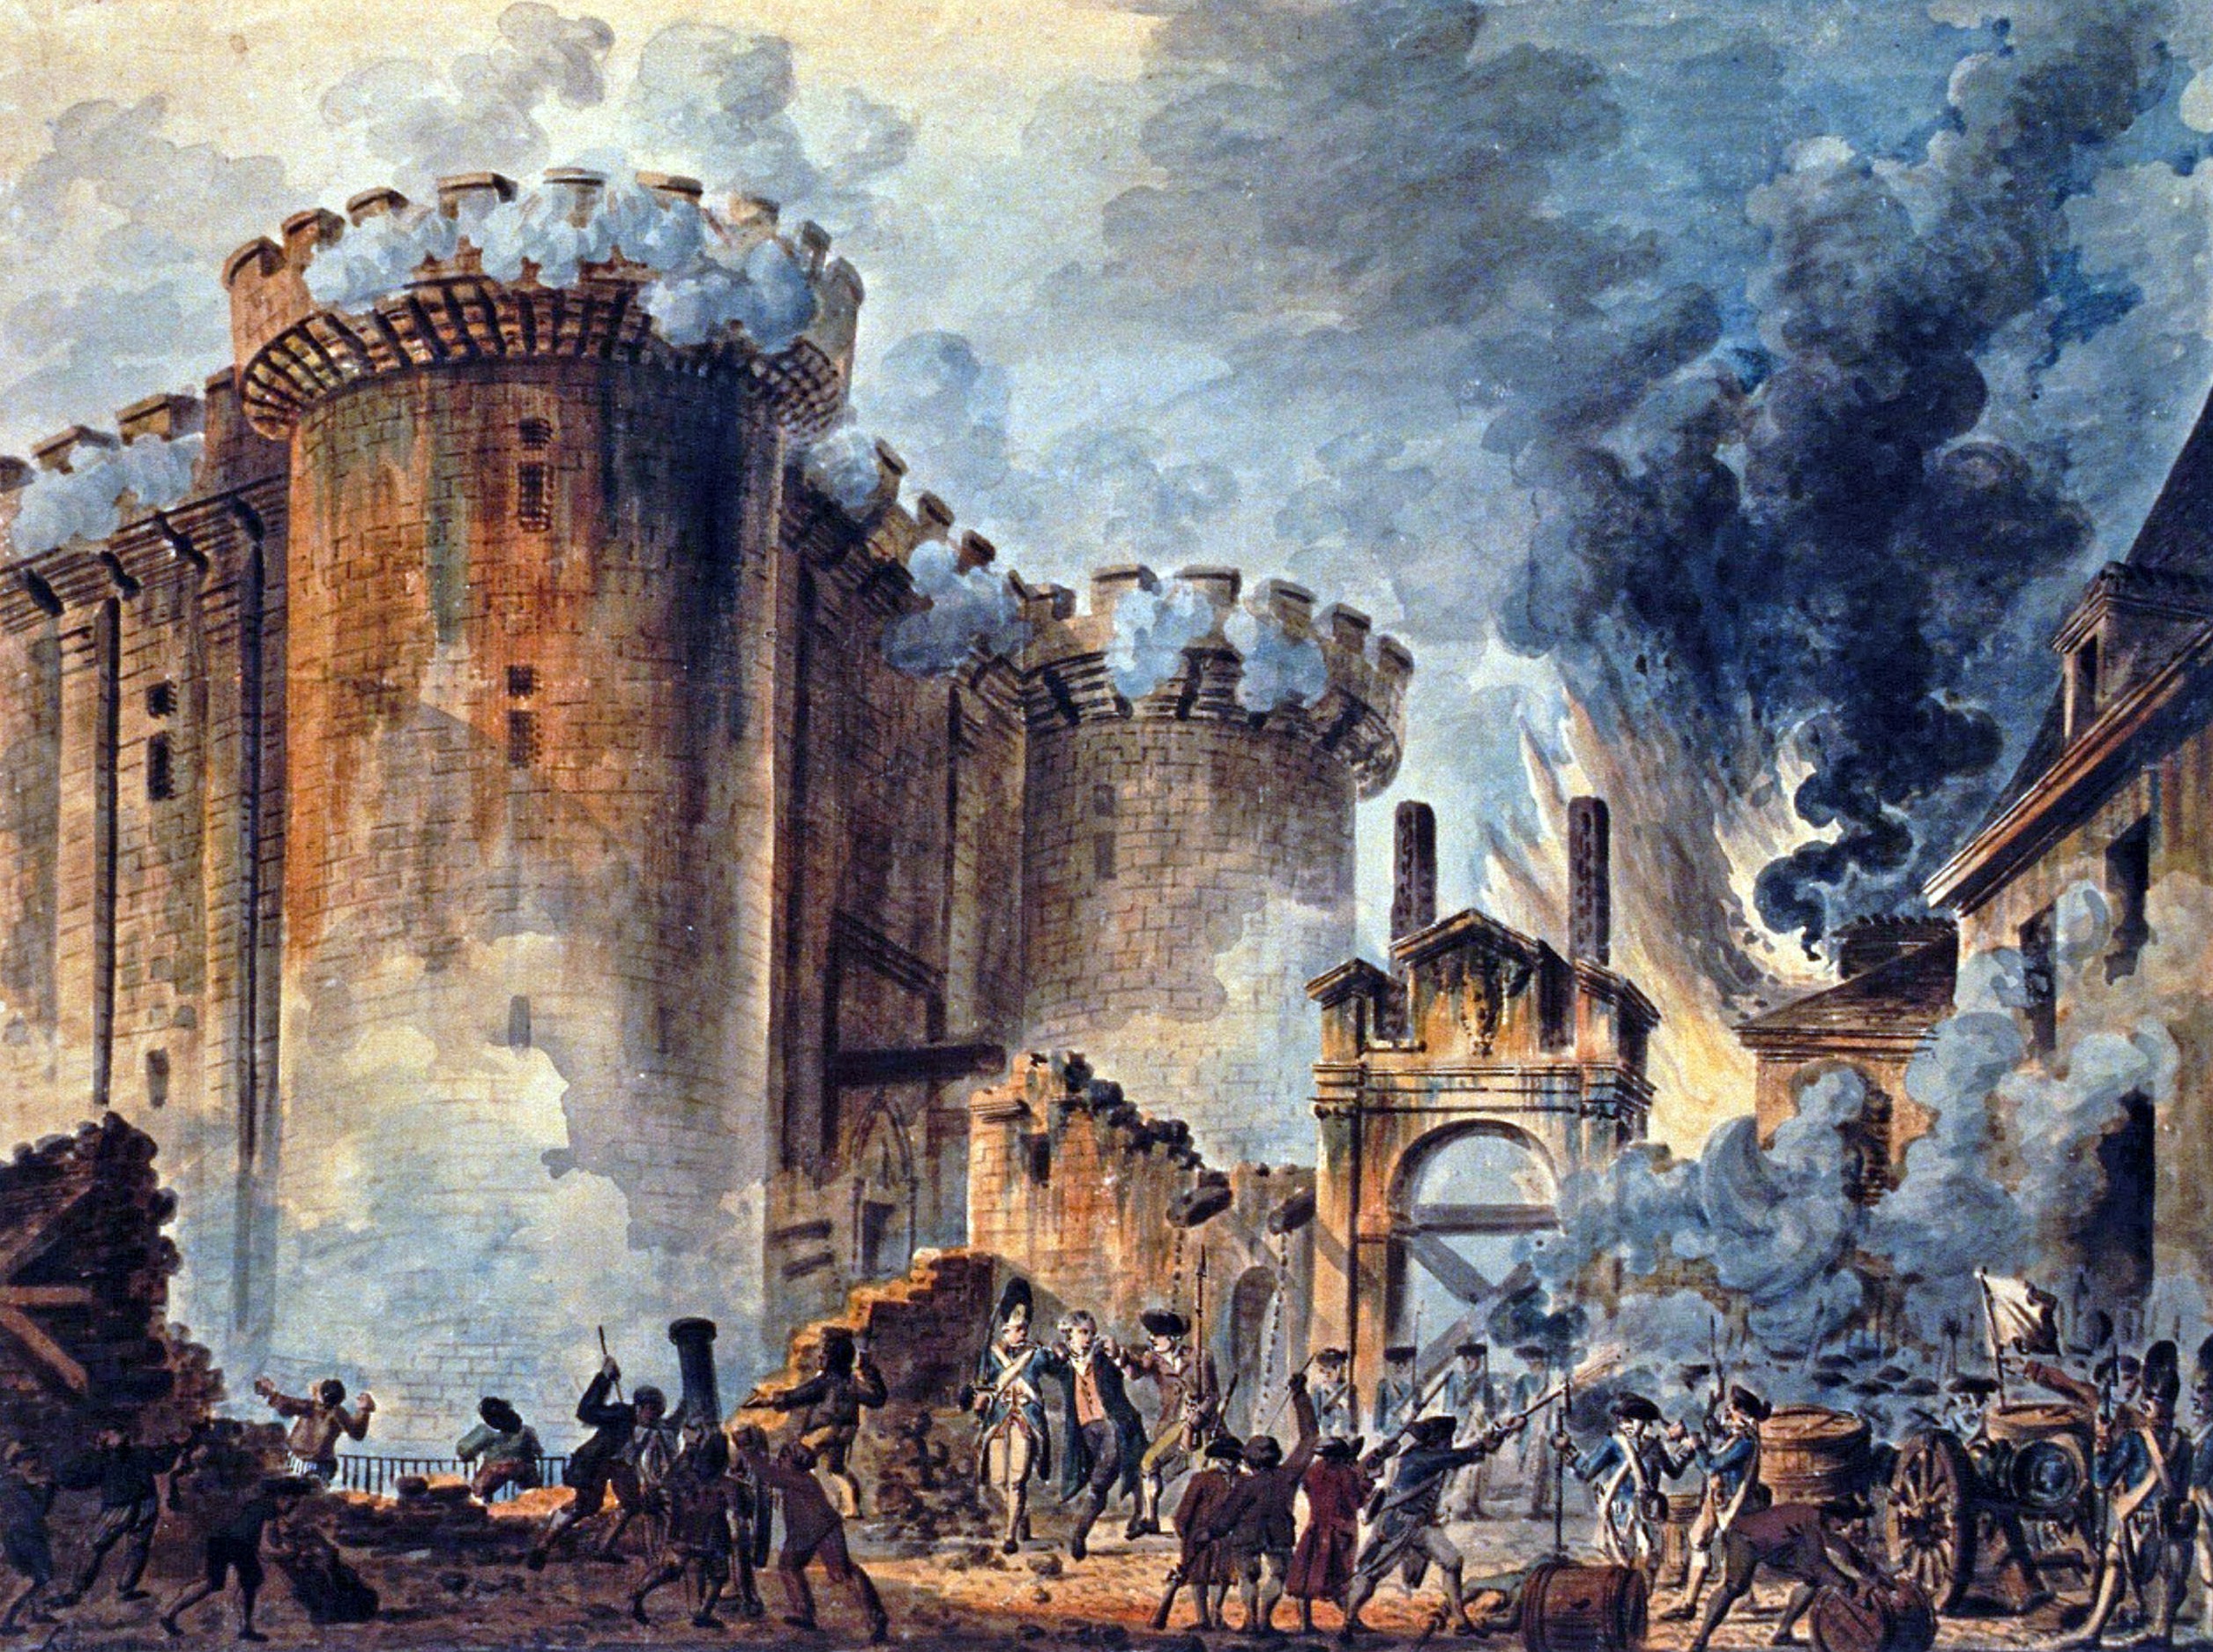 Tableau de Jean-Pierre Houël de la prise de la Bastille. © Jean-Pierre Houël, Wikimedia Commons, Domaine Public